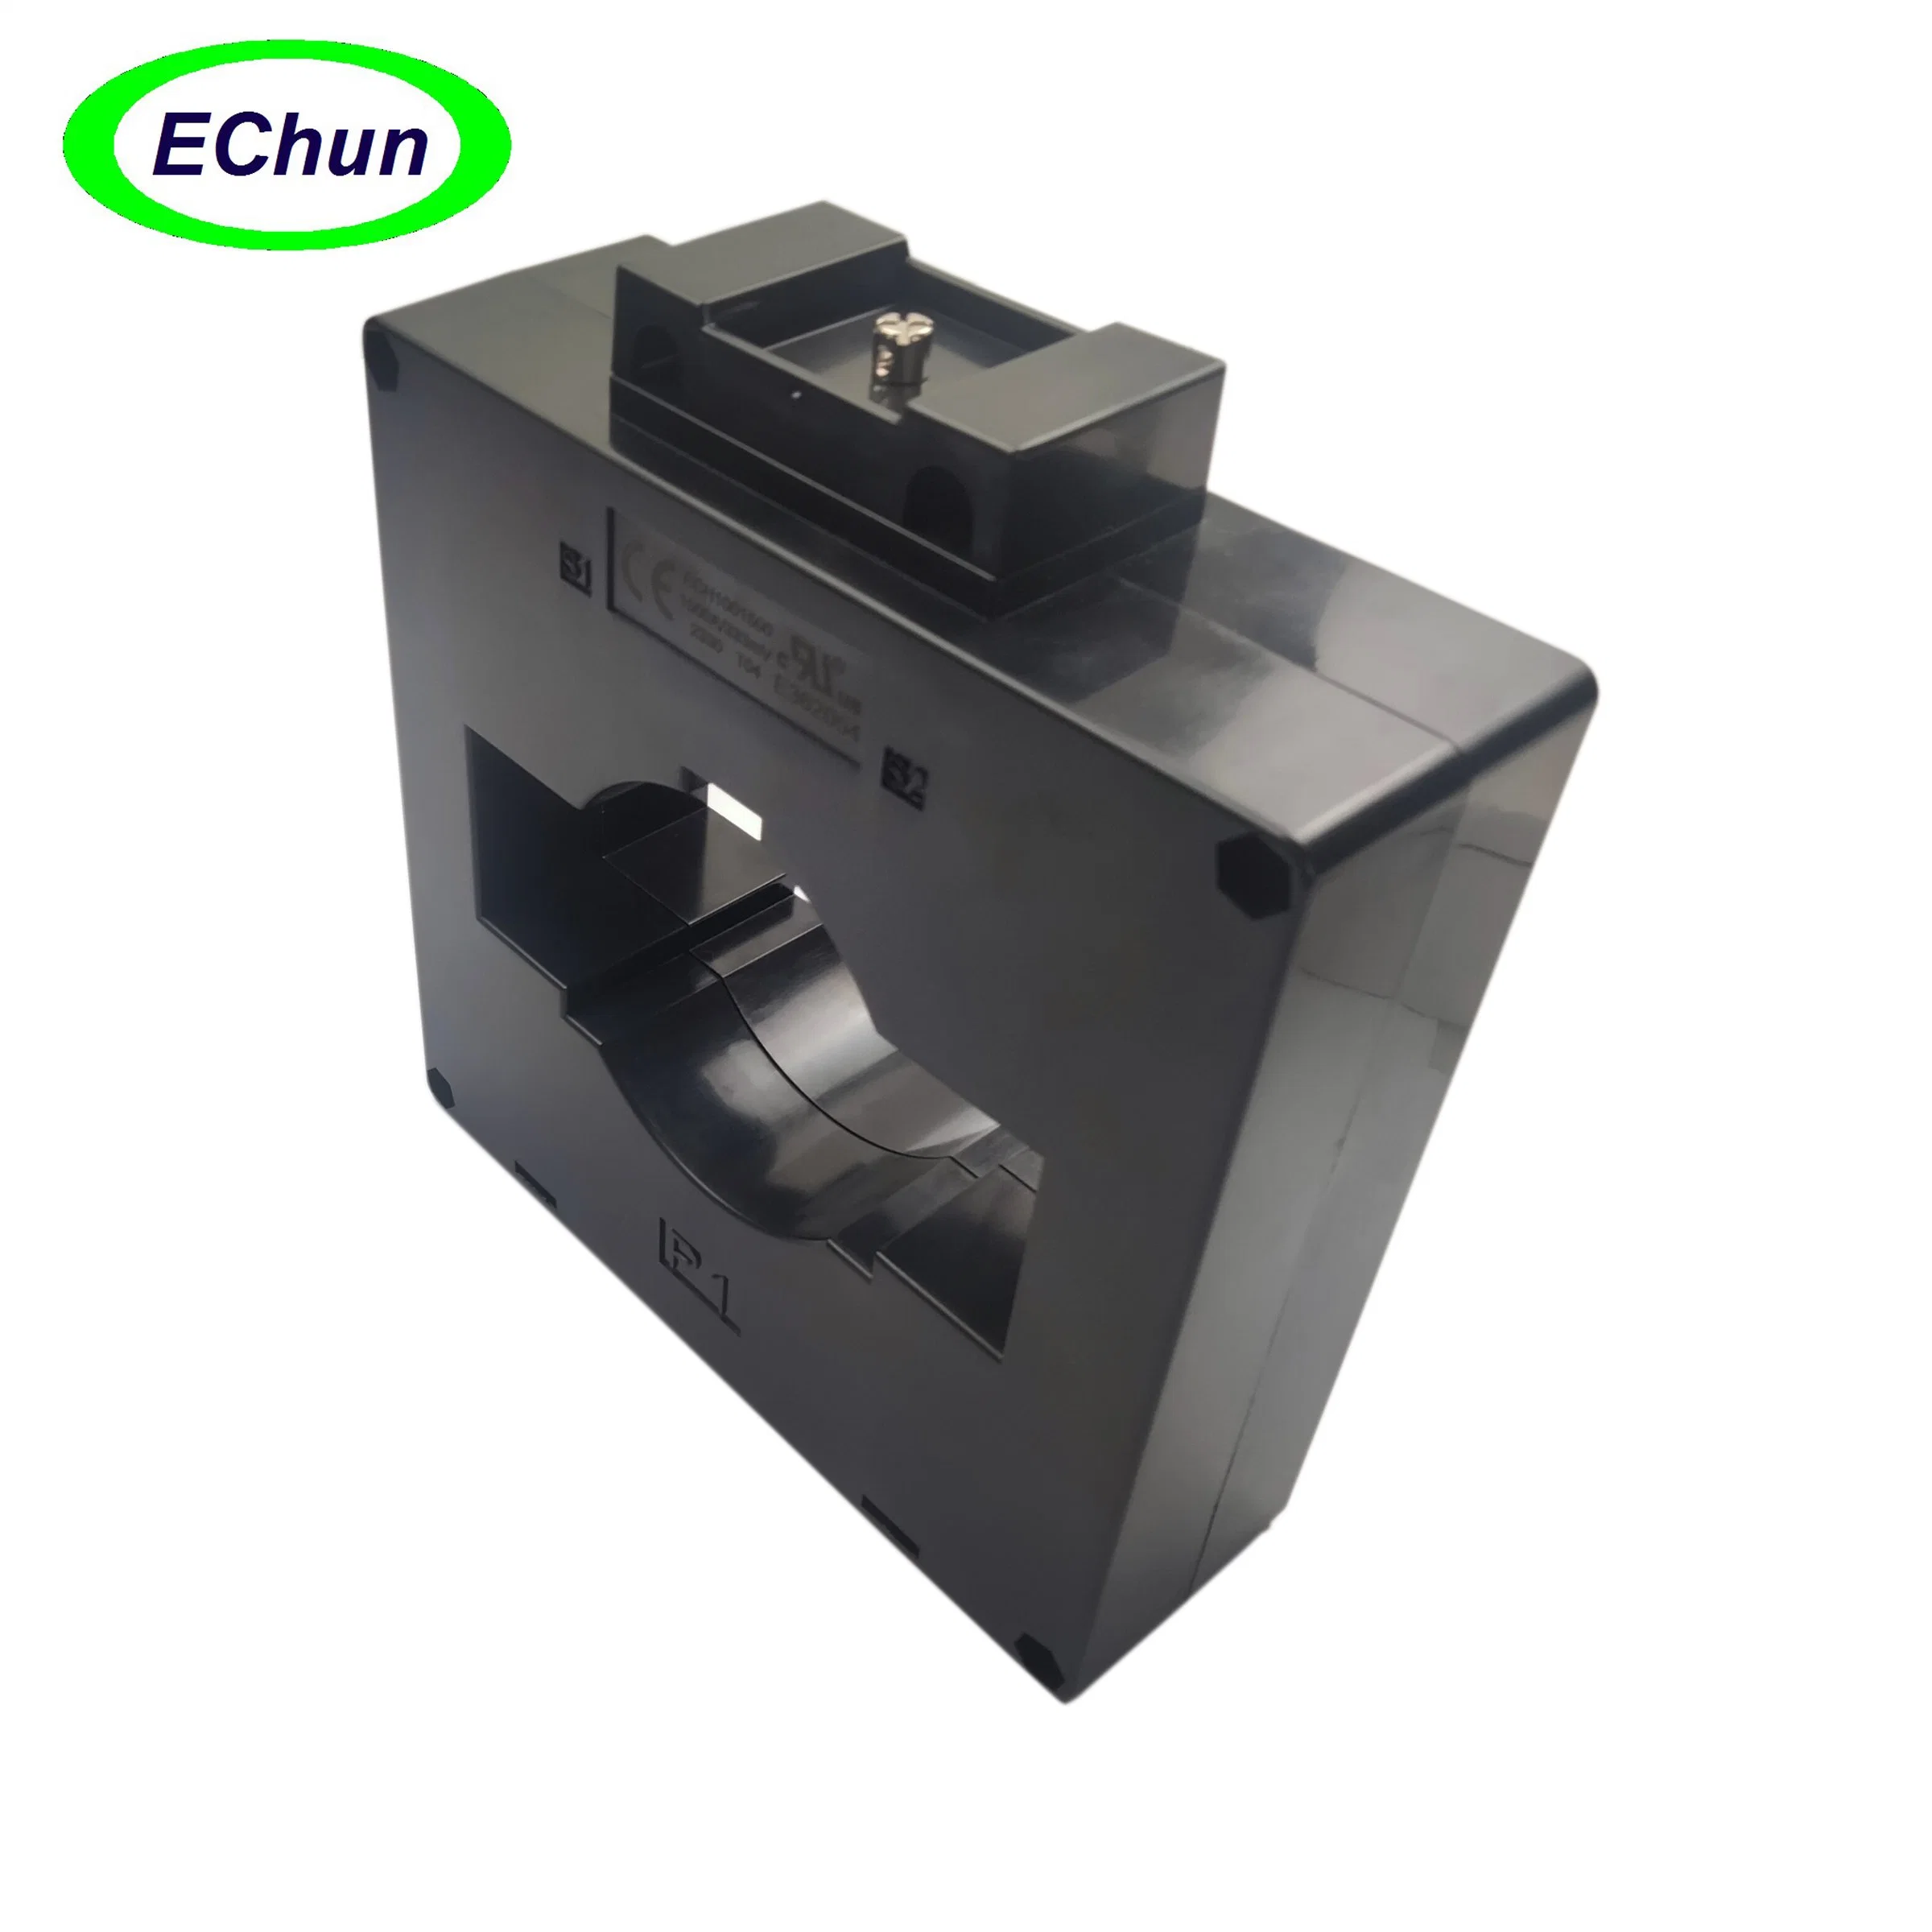 Echun UL Certification CT Ech100 Closed-Loop Current Transformer AC 1500A/333mv